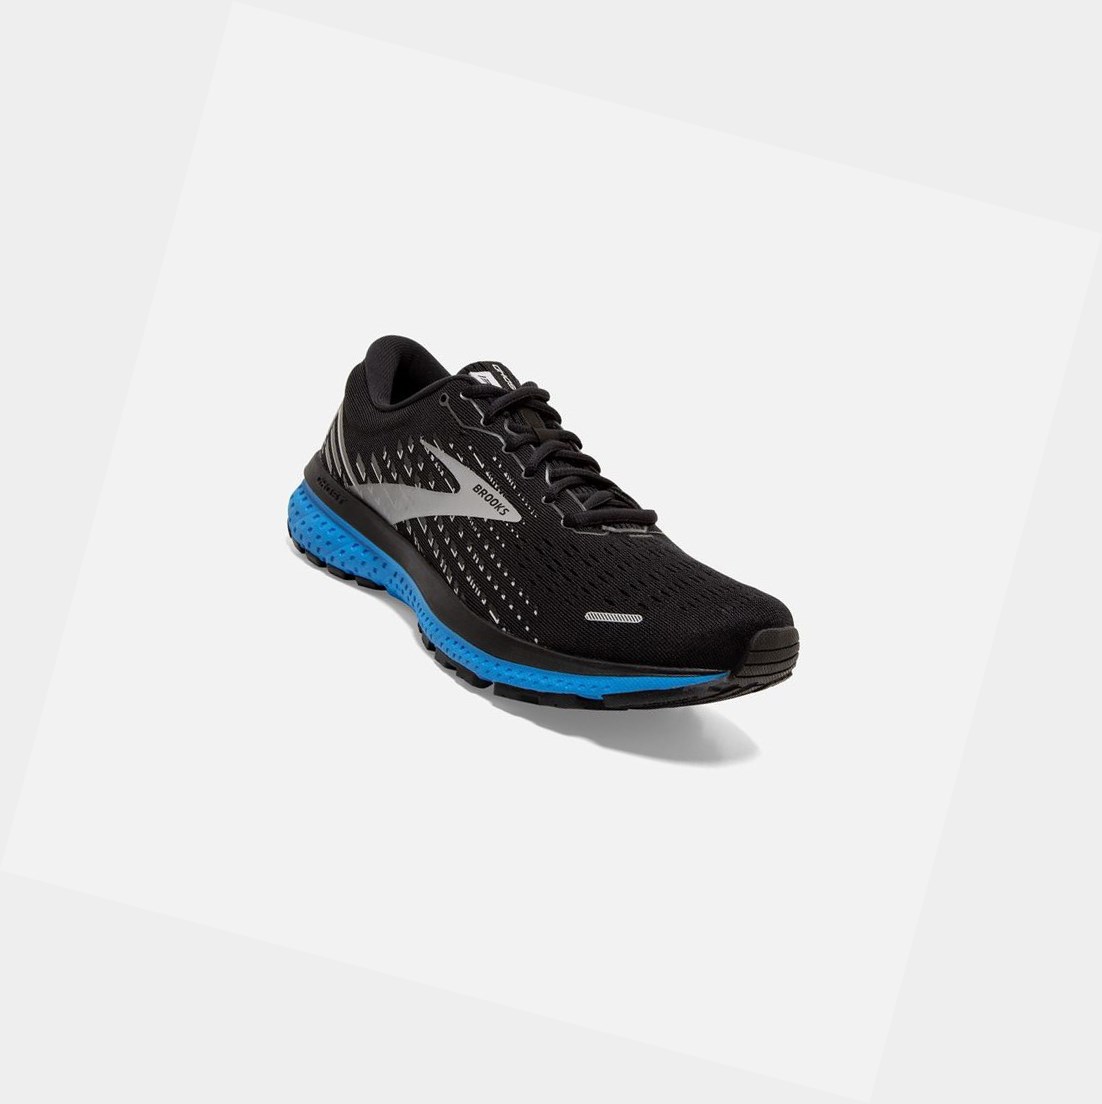 Brooks Ghost 13 Men's Road Running Shoes Black / Grey / Blue | PZHA-51068